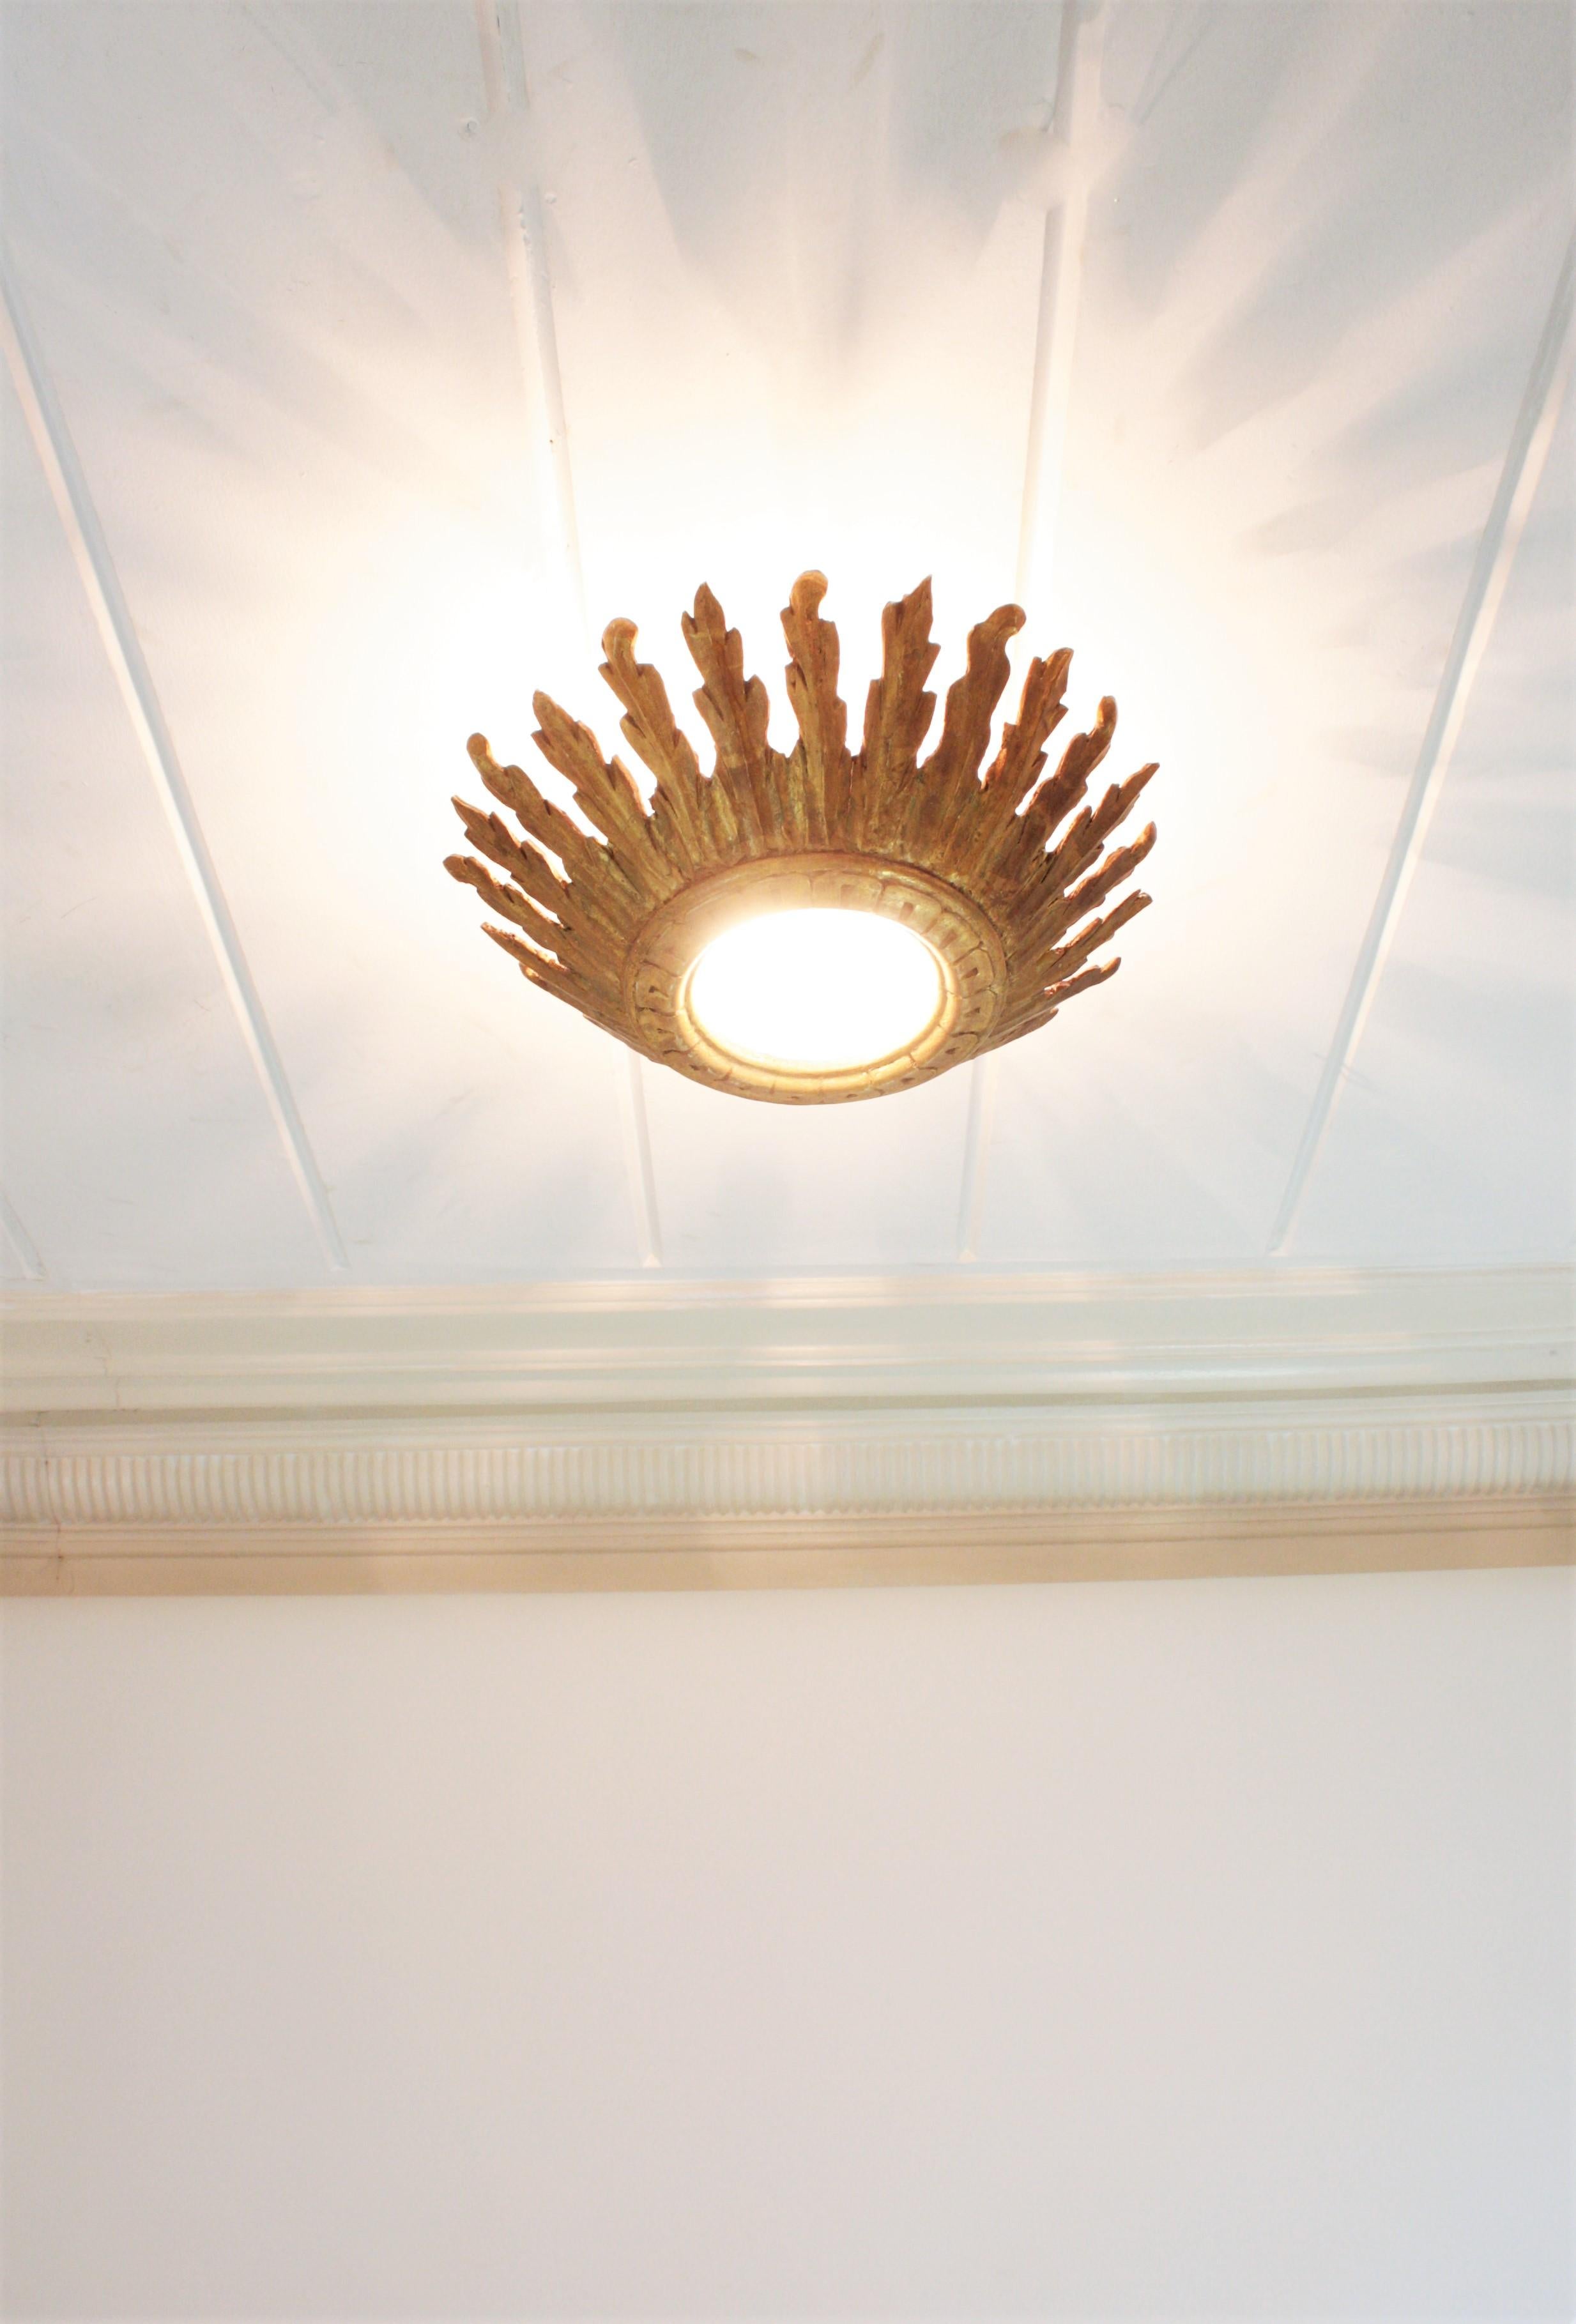 Sunburst Crown Ceiling Flush Mount Light Fixture in Giltwood, Spanish Baroque For Sale 13